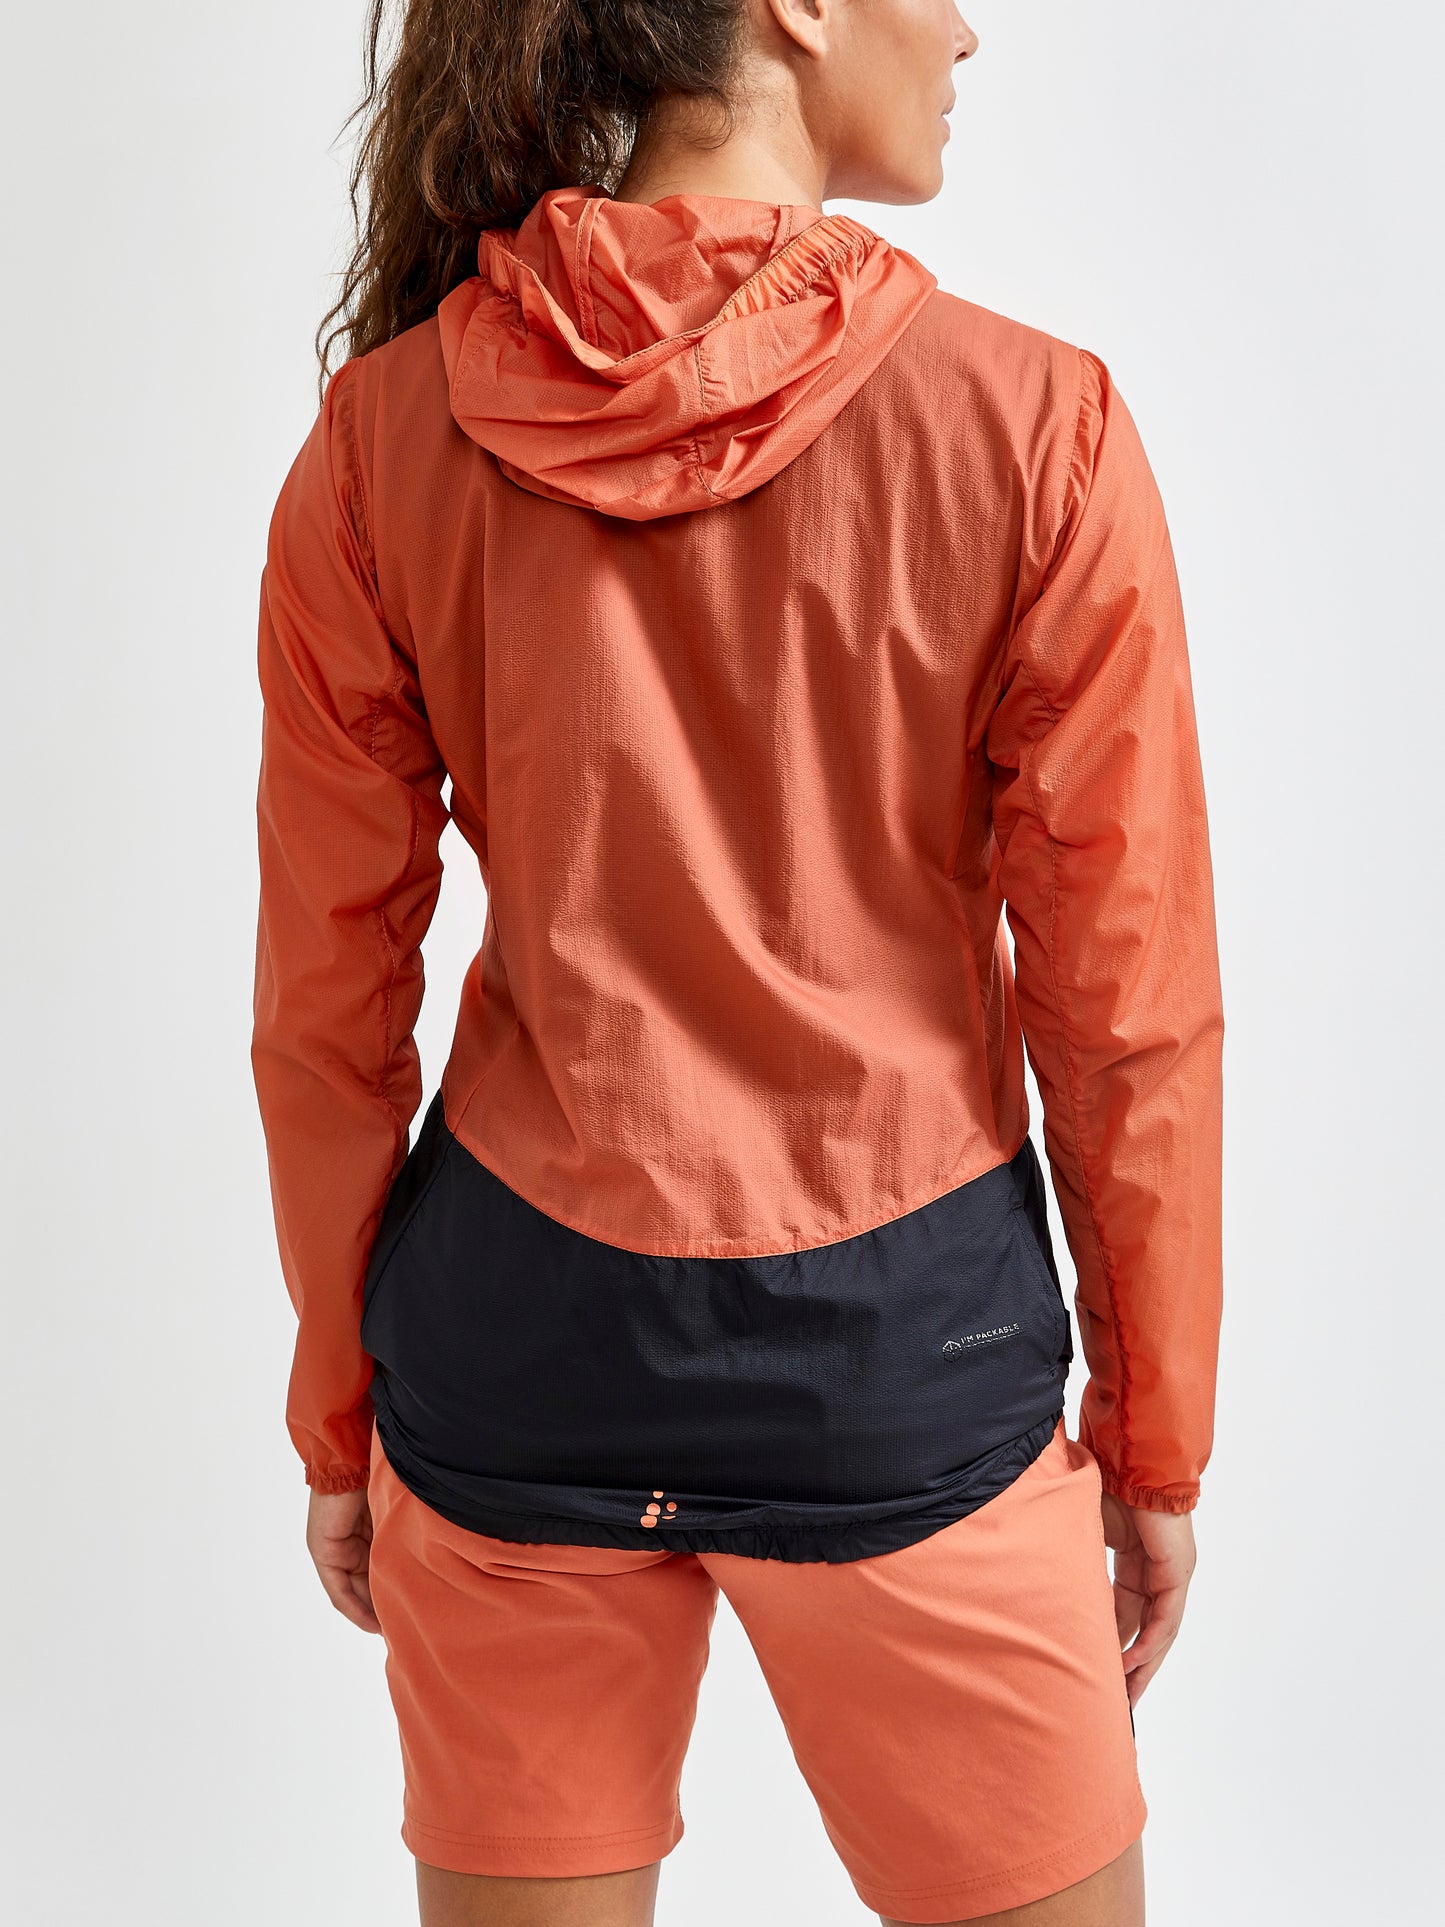 Hjólajakki - ADV Offroad Wind jacket